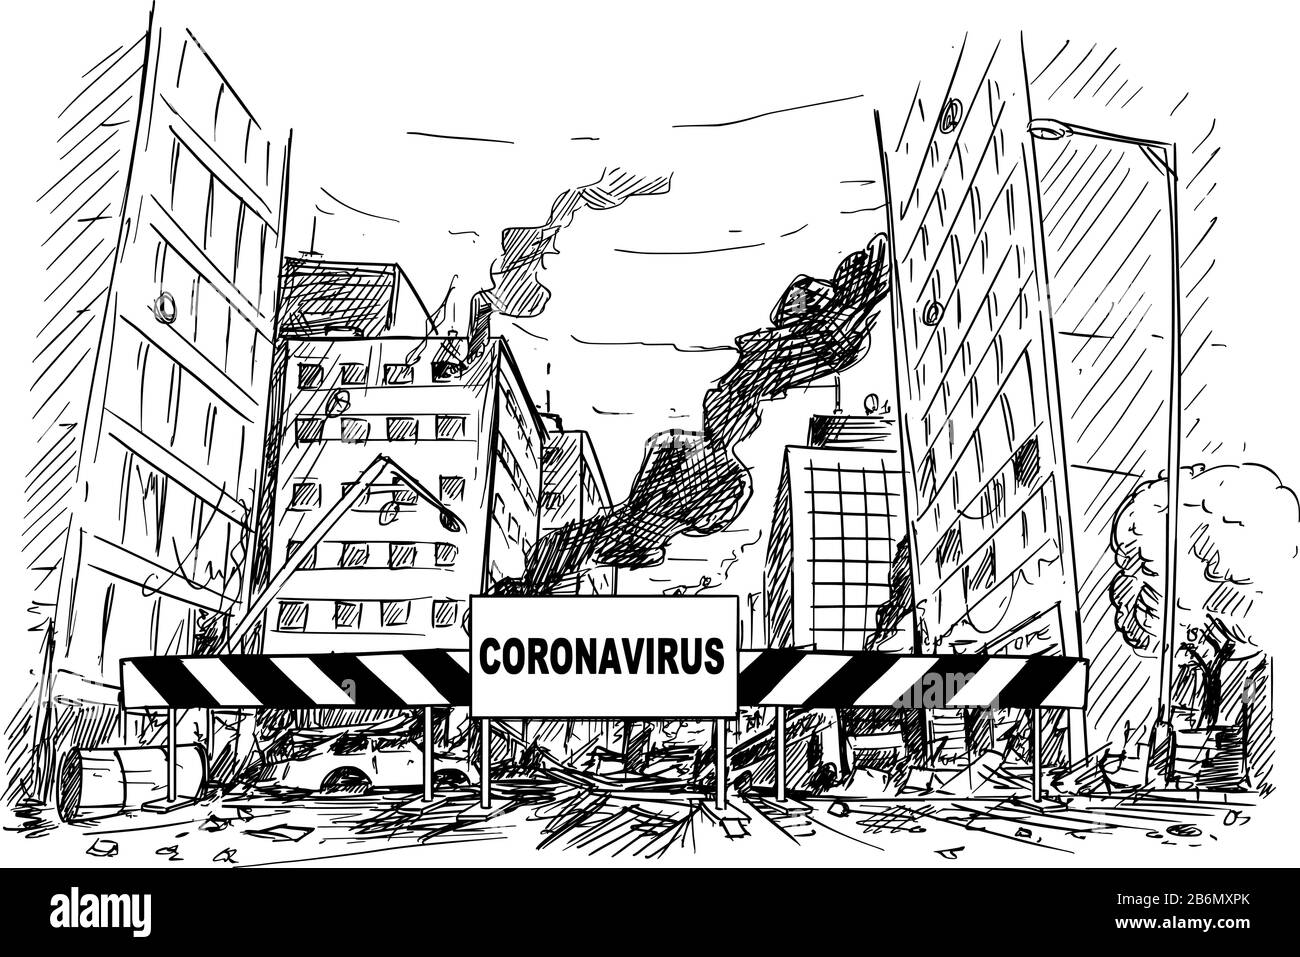 Vector cartoon stick figure drawing conceptual illustration of quarantine area roadblock blocking destroyed city street after coronavirus covid-19 epidemic or infection panic. Stock Vector